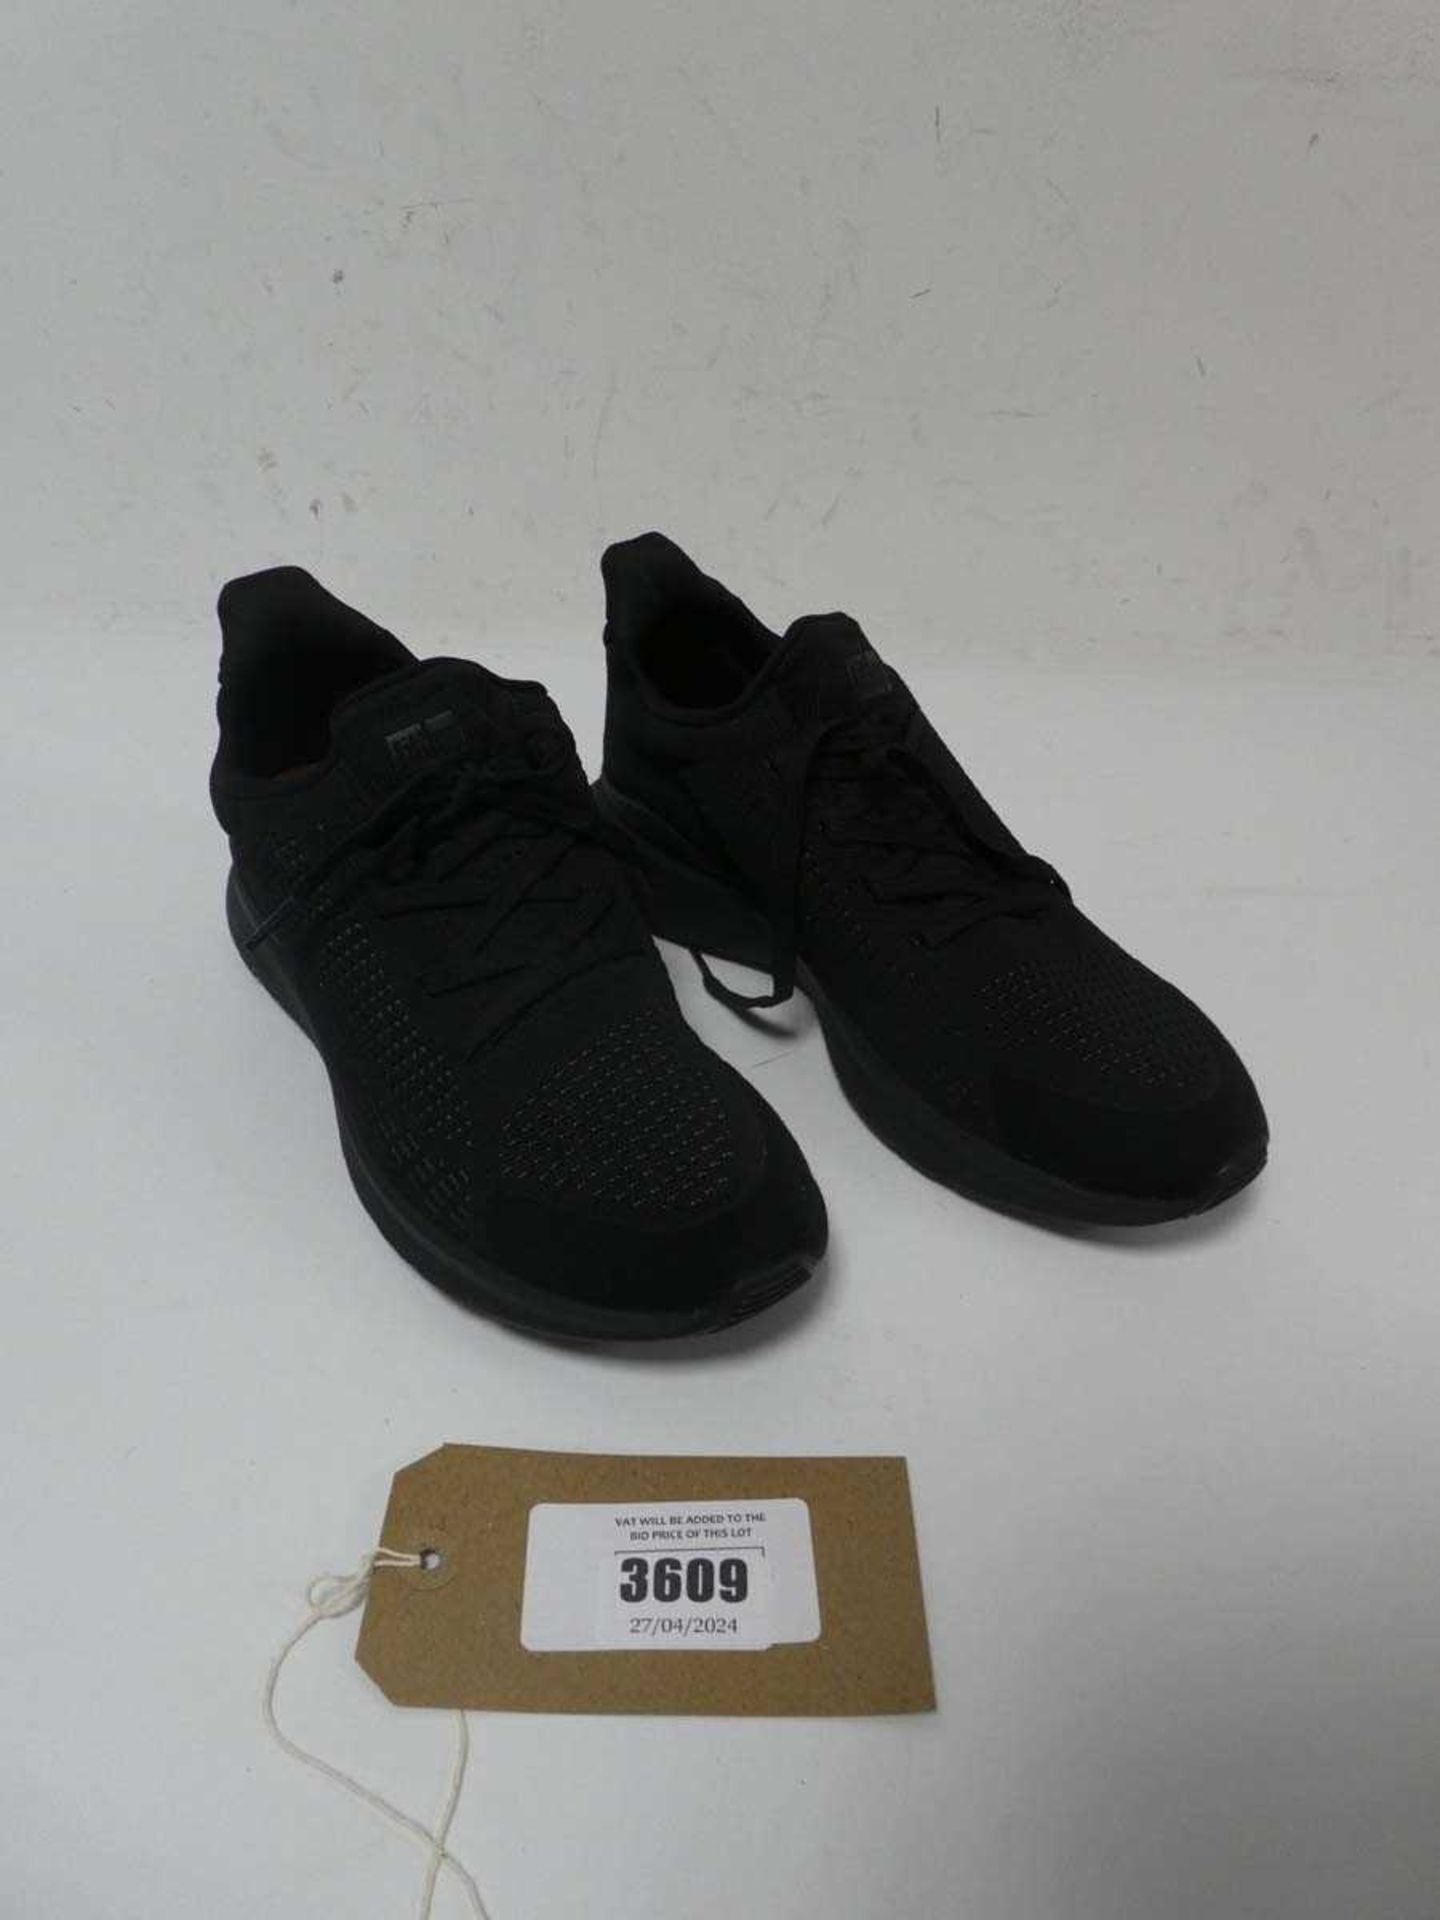 +VAT 1 x Fitflop black knit sneakers, UK 6.5